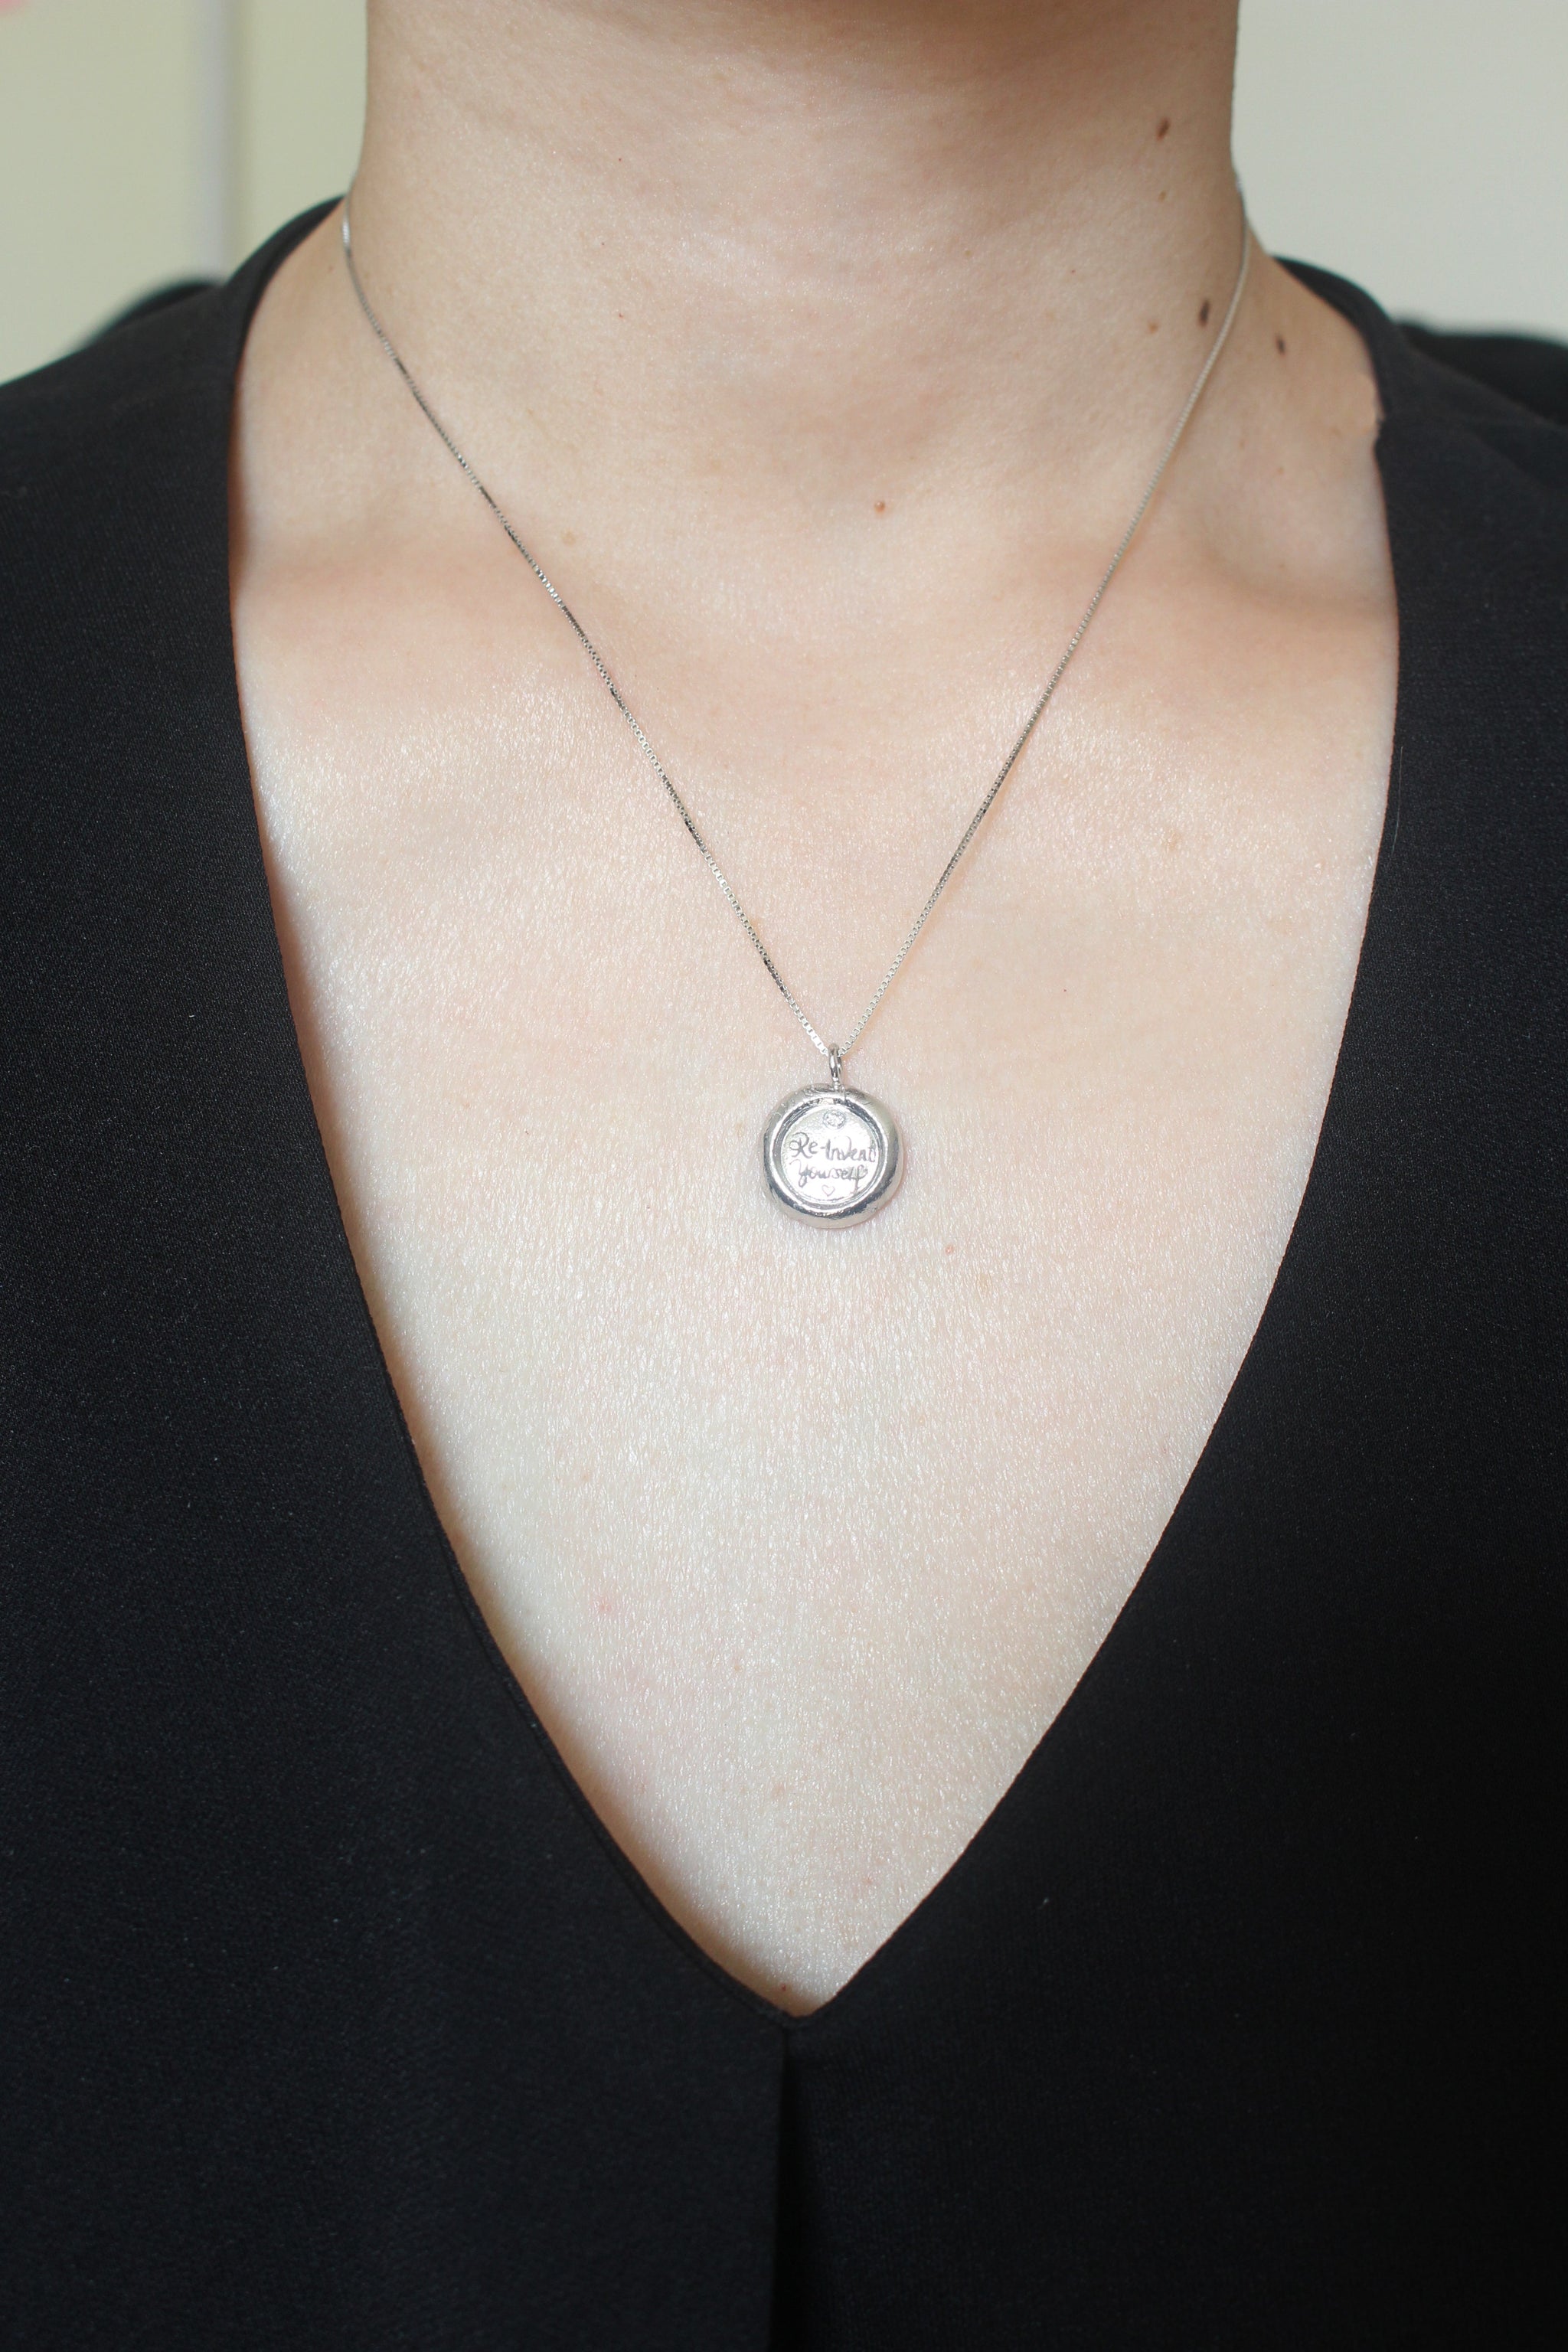 New Beginning - Empowerment Diamond Silver Necklace / Graduation Gift / New Life Gift